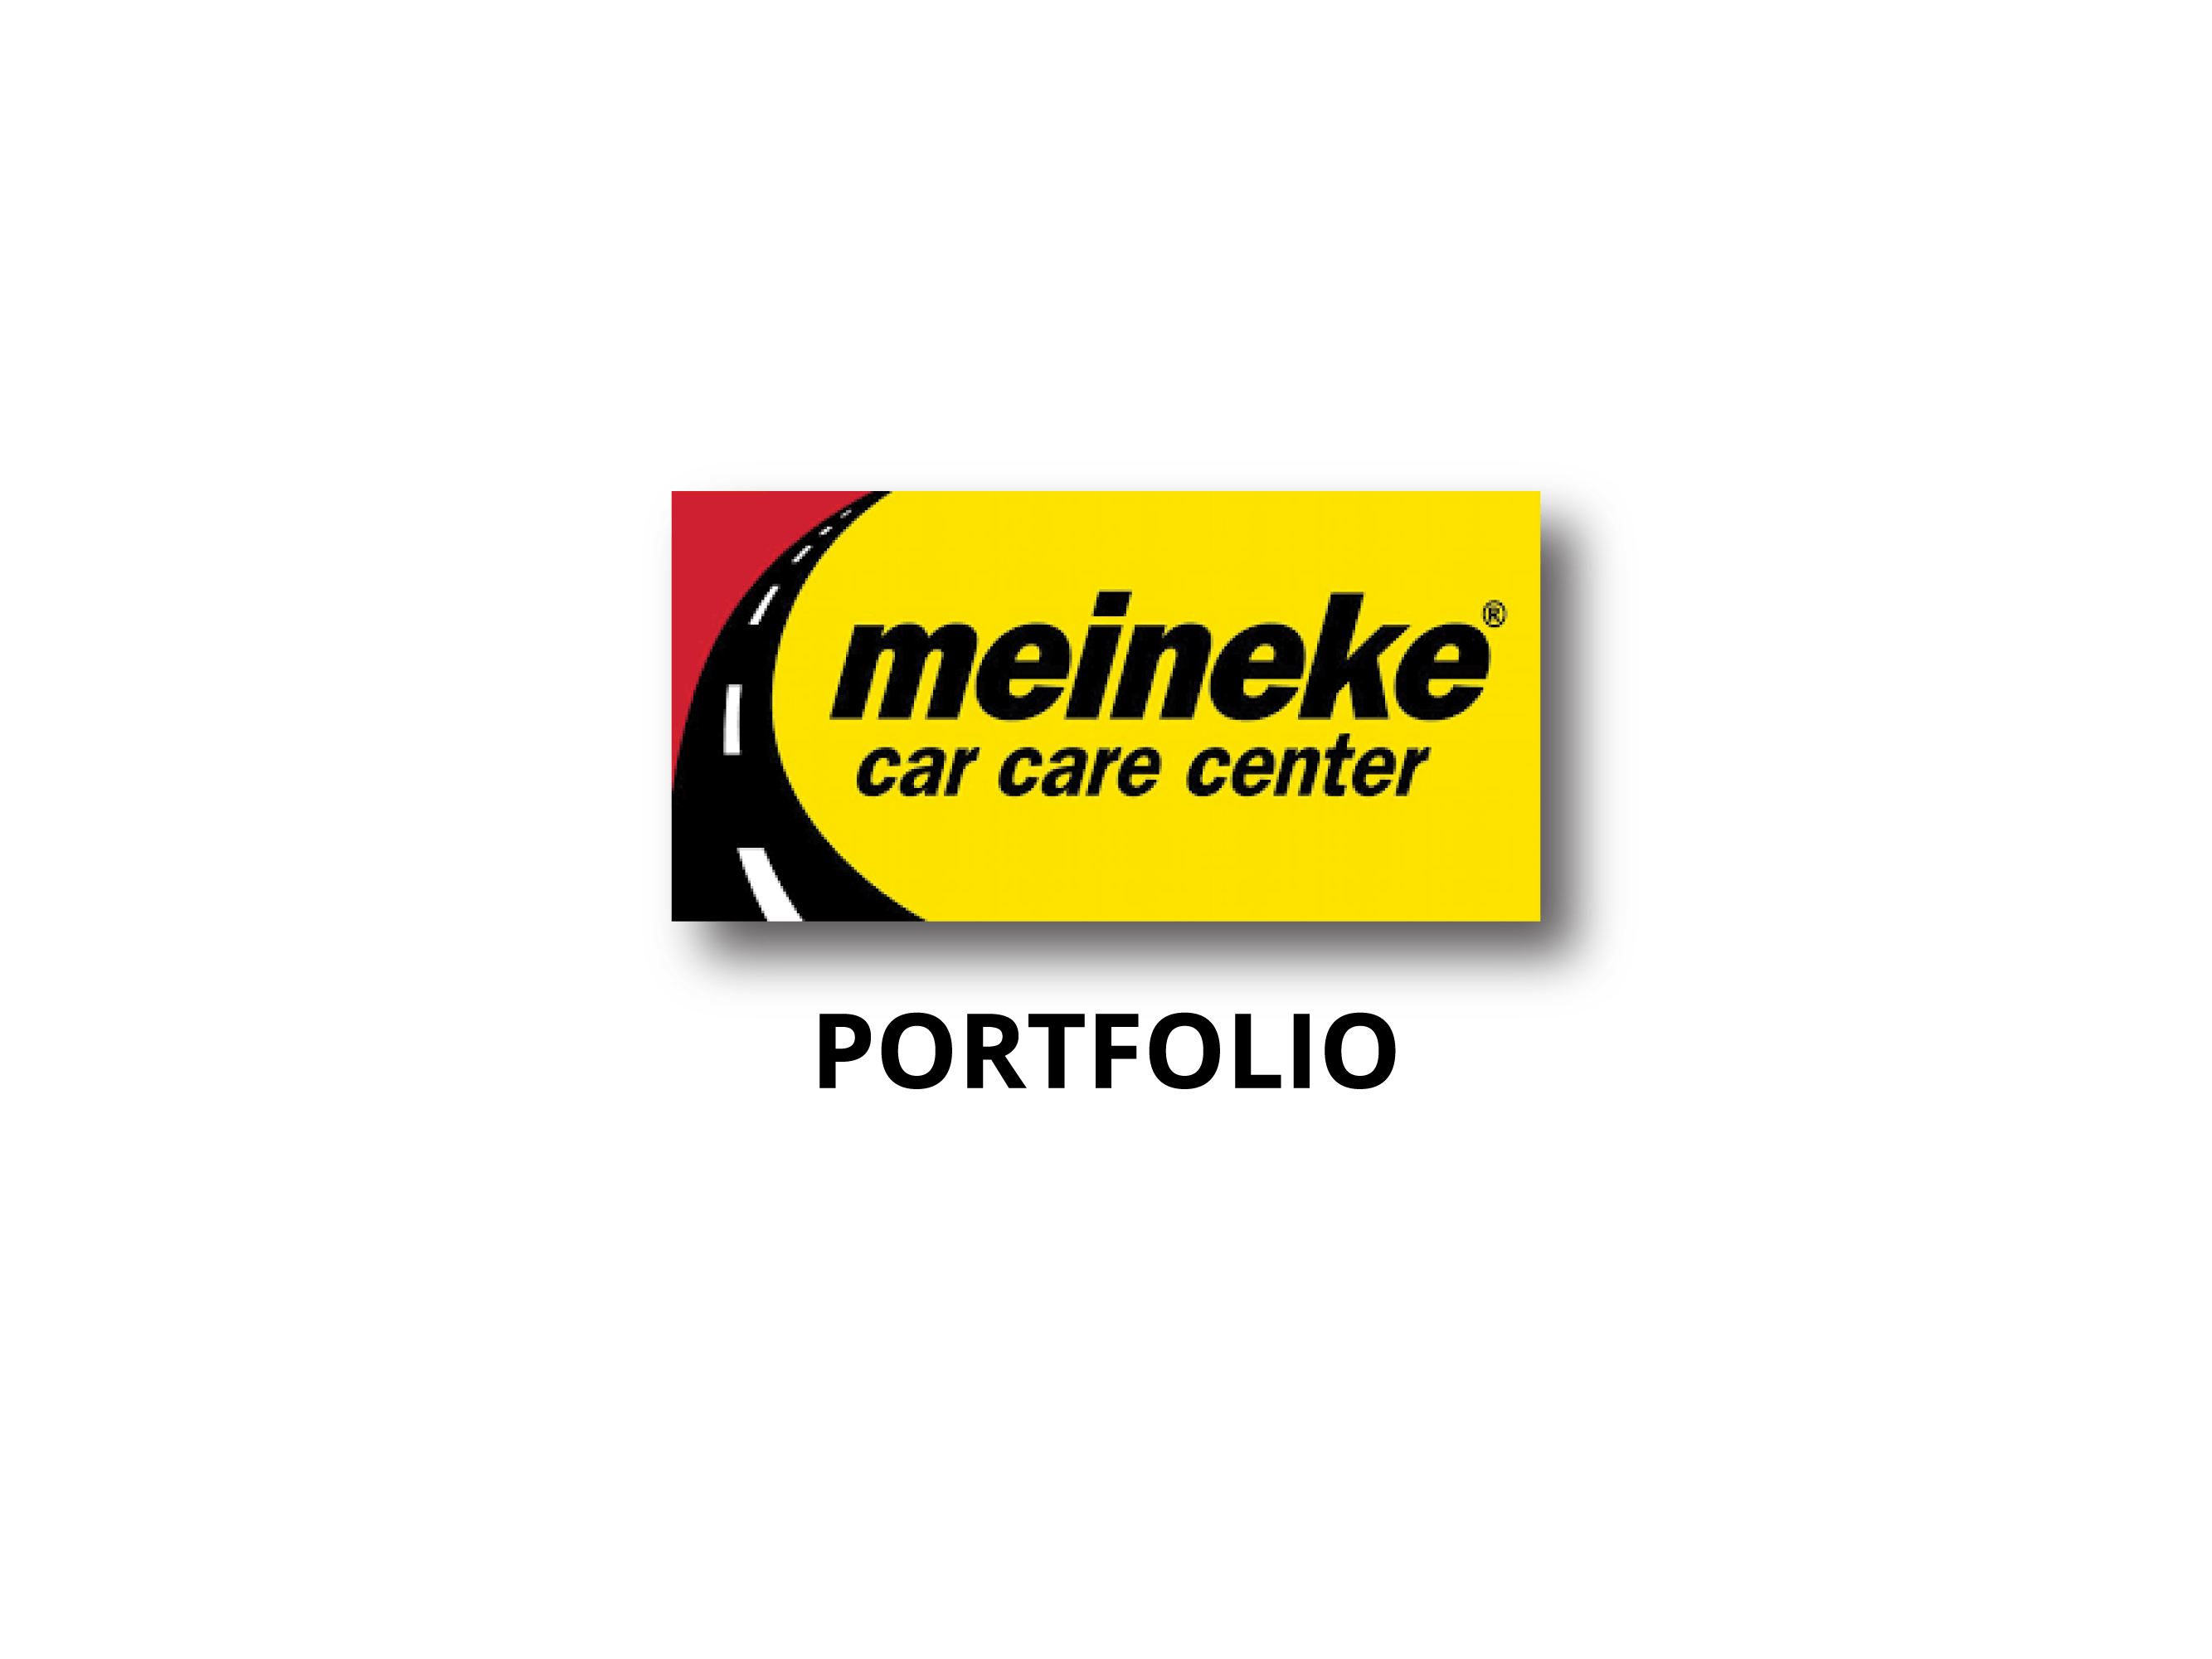 Meineke Logo - Commercial Plus Meineke Portfolio Available